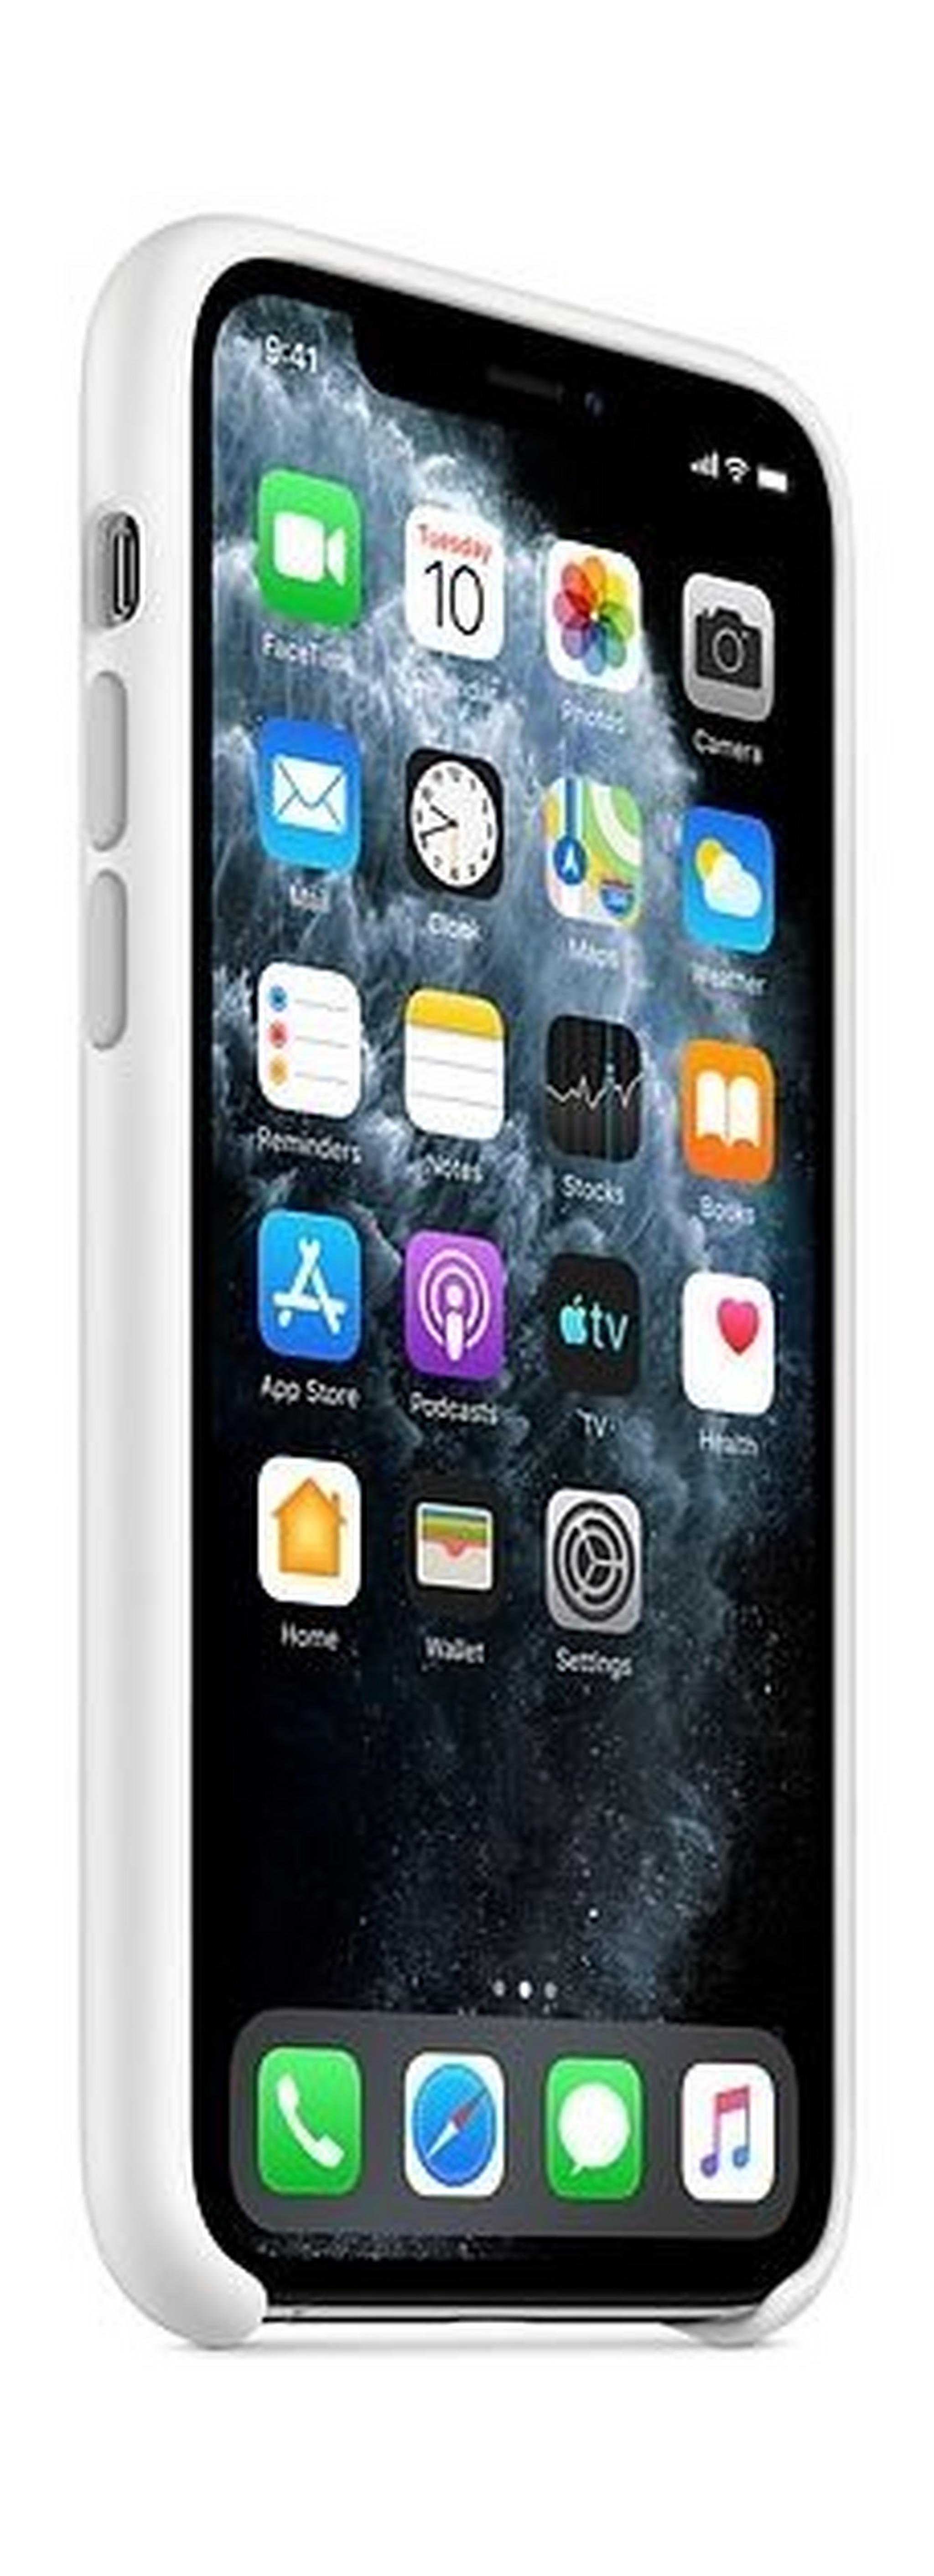 Apple iPhone 11 Pro Silicone Case - White